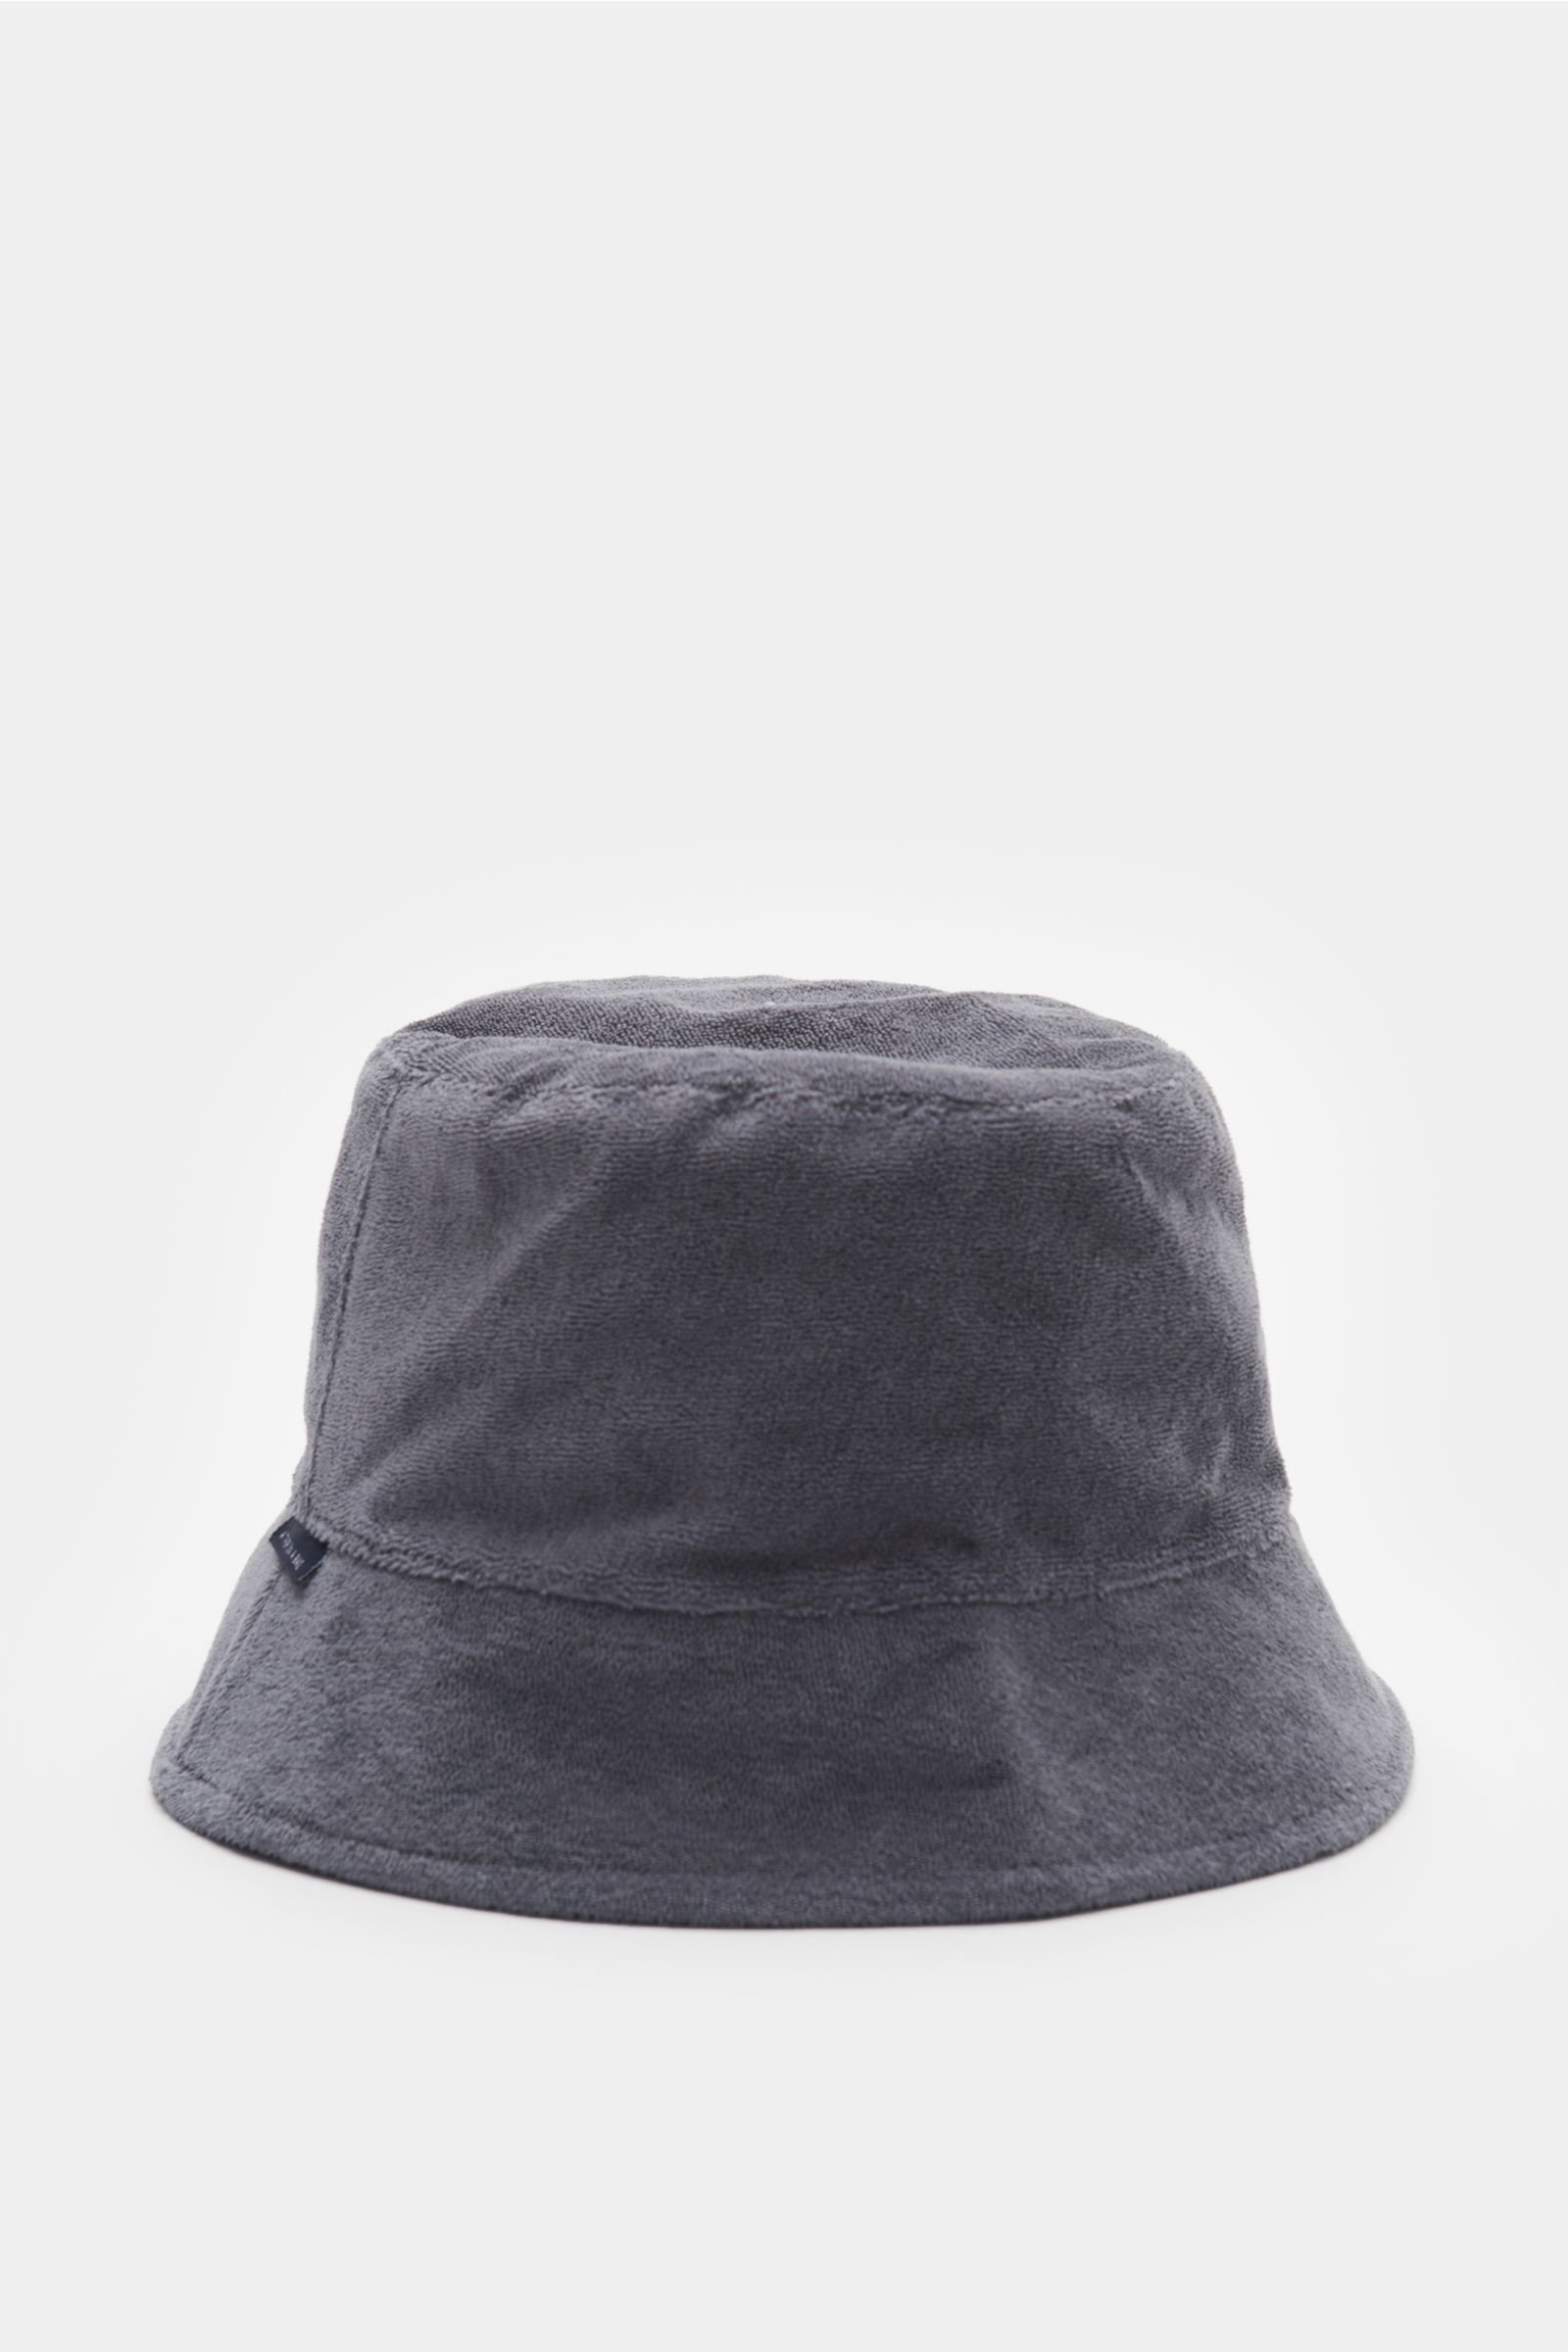 Frottee Bucket Hat 'Terry Hat' grau